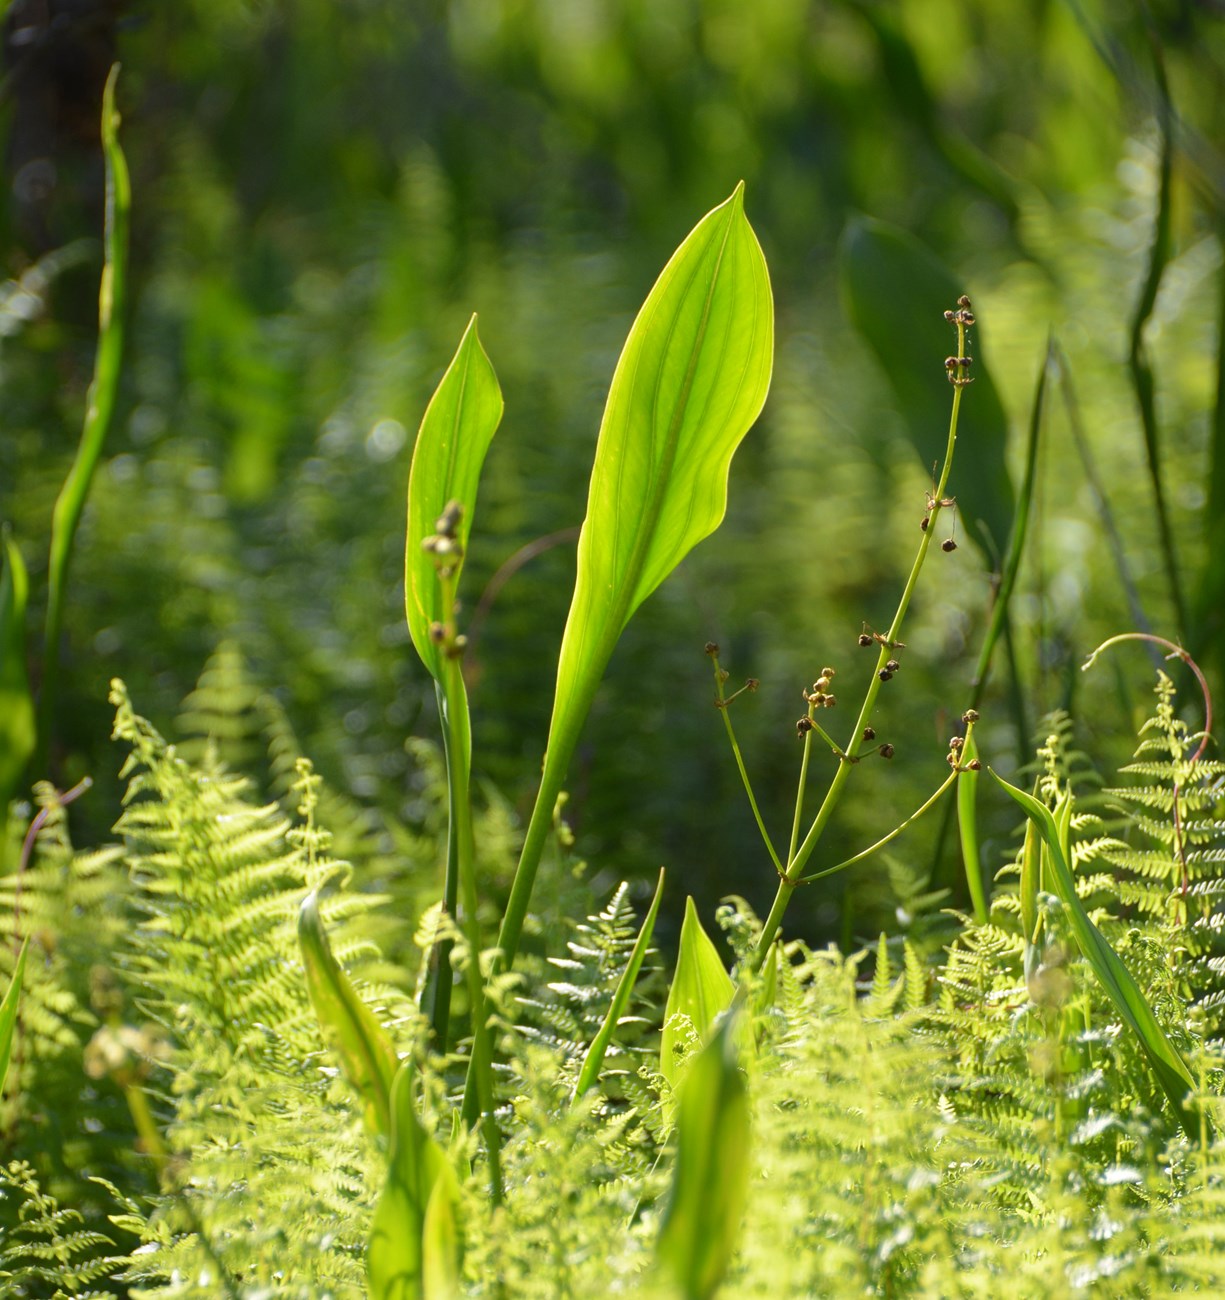 Bulltongue (Sagittaria lancifolia) and fern in marsh